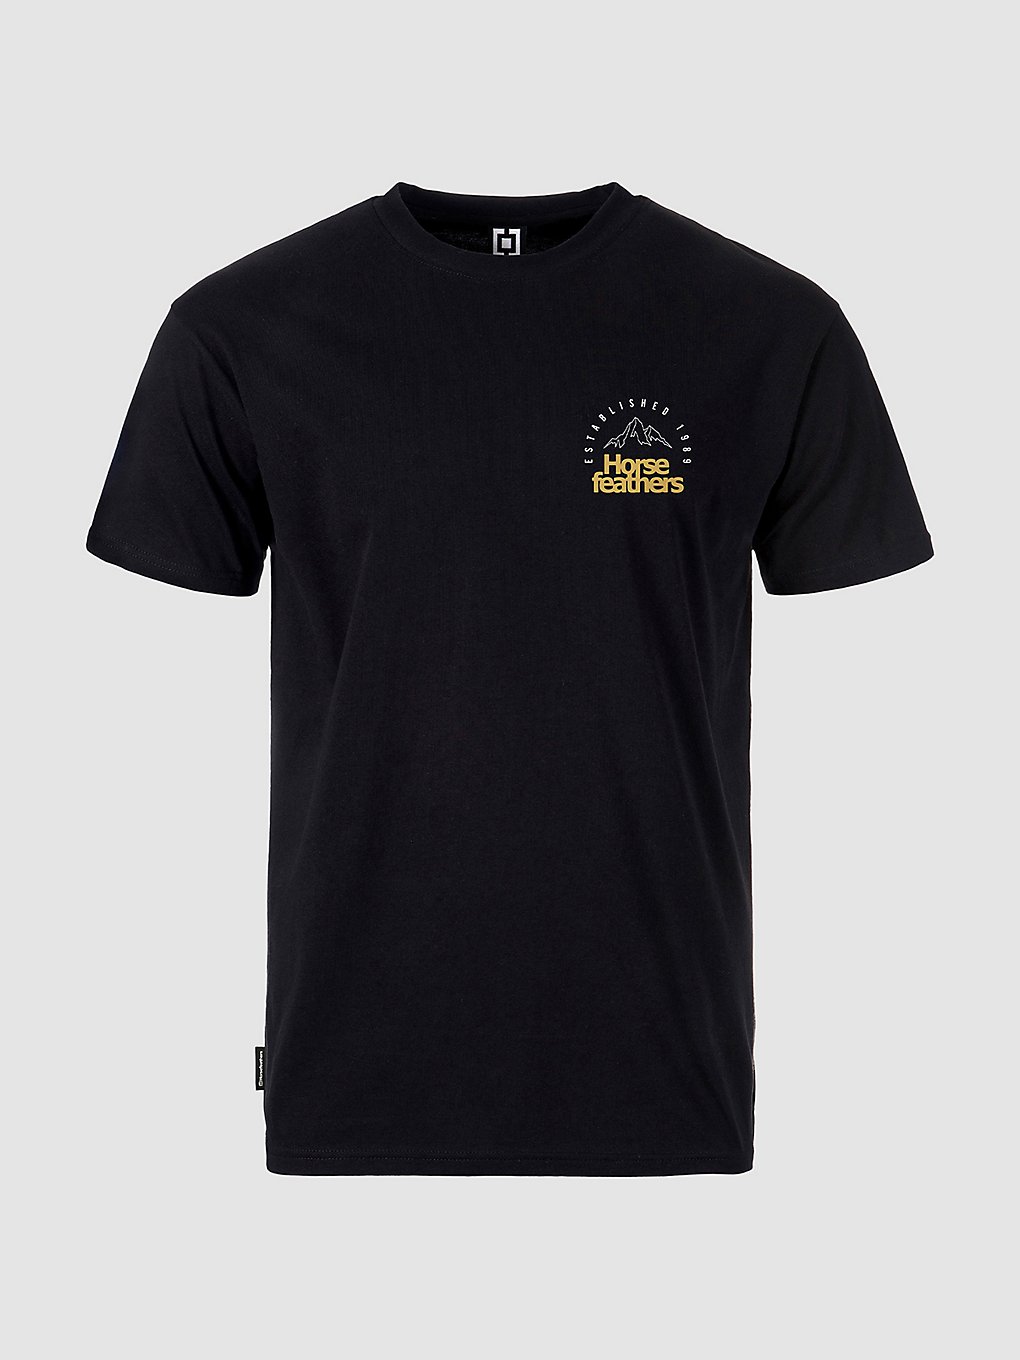 Horsefeathers Peak Emblem T-Shirt black kaufen